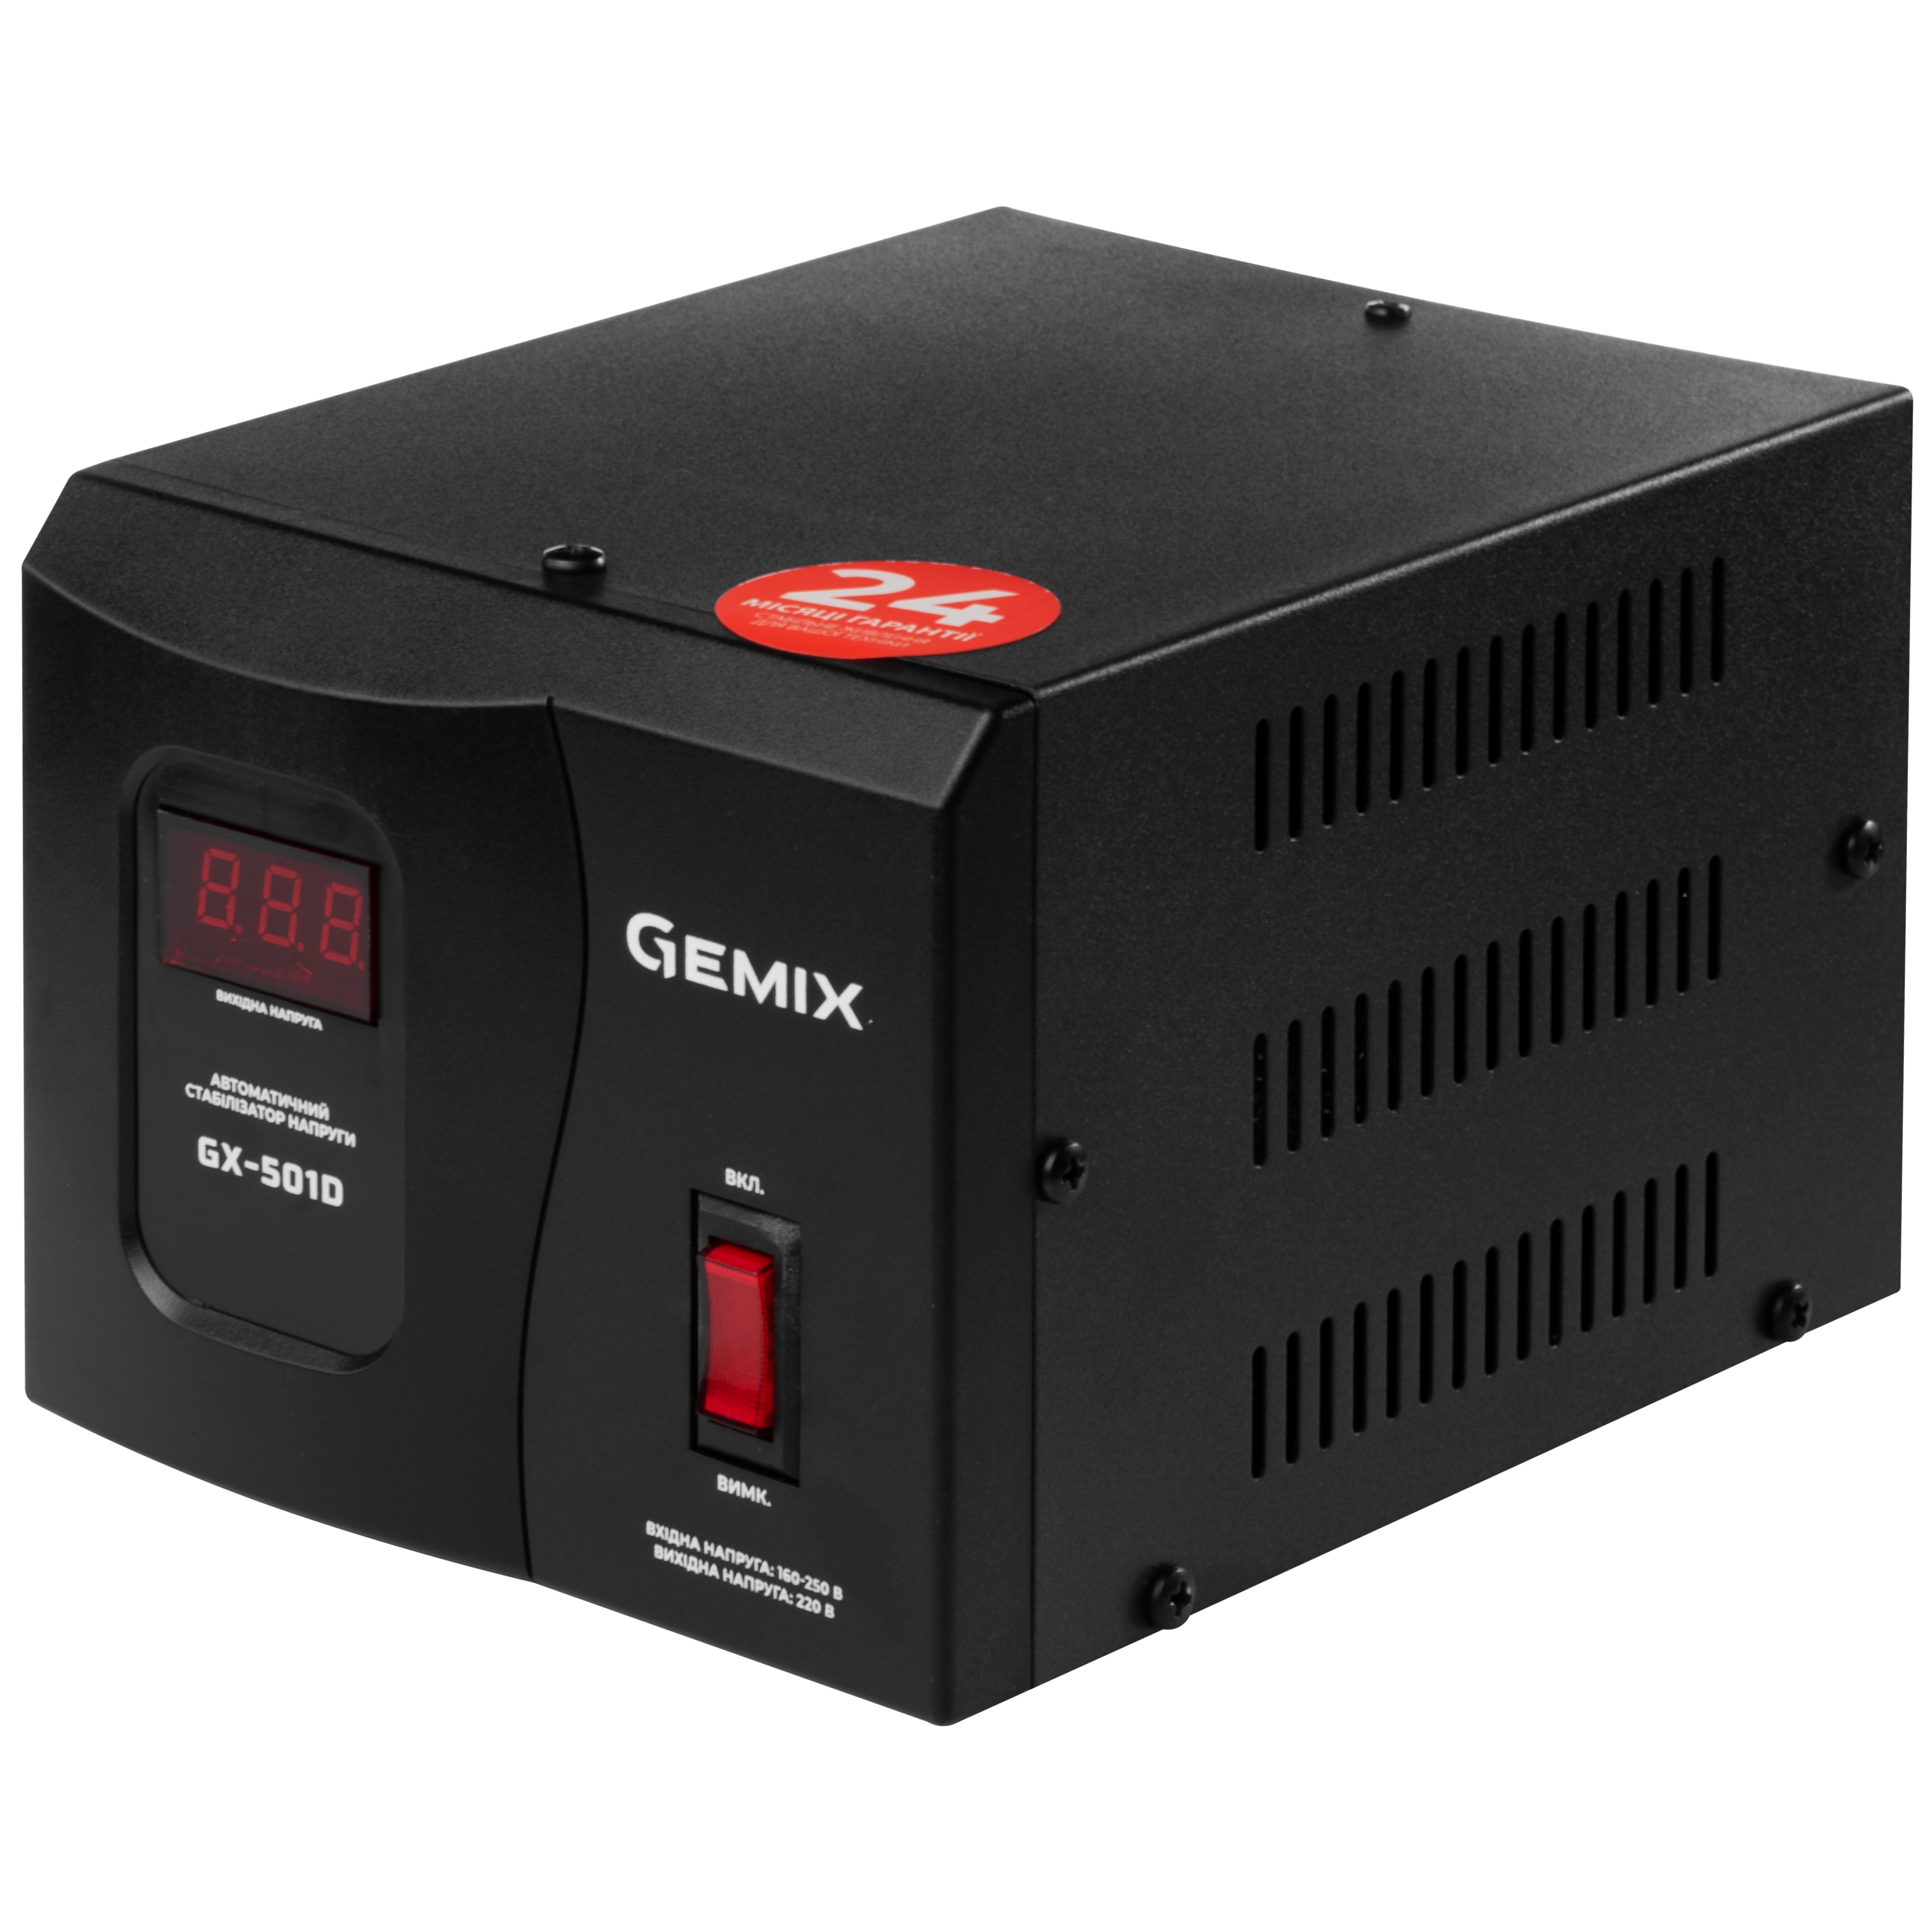 Инструкция стабилизатор для телевизора Gemix GX-501D